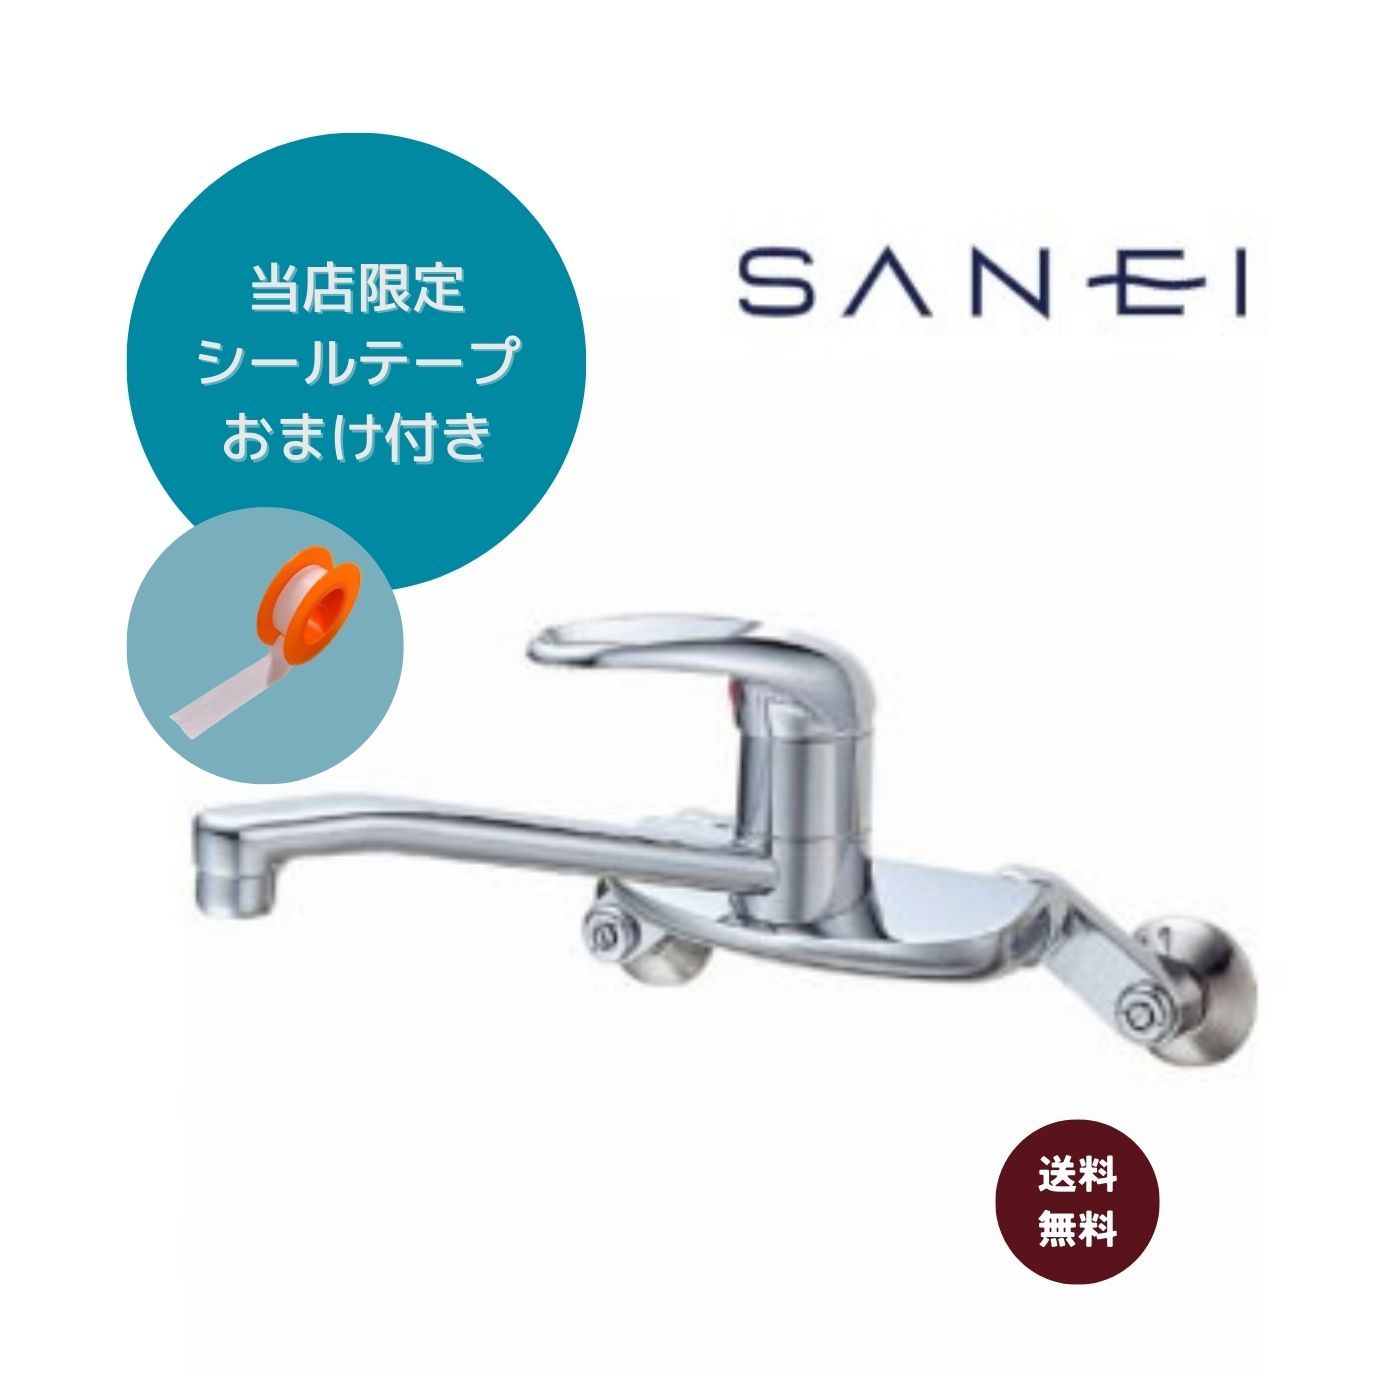 SANEI シングル混合栓 CK2710-13 (水栓金具) 価格比較 - 価格.com